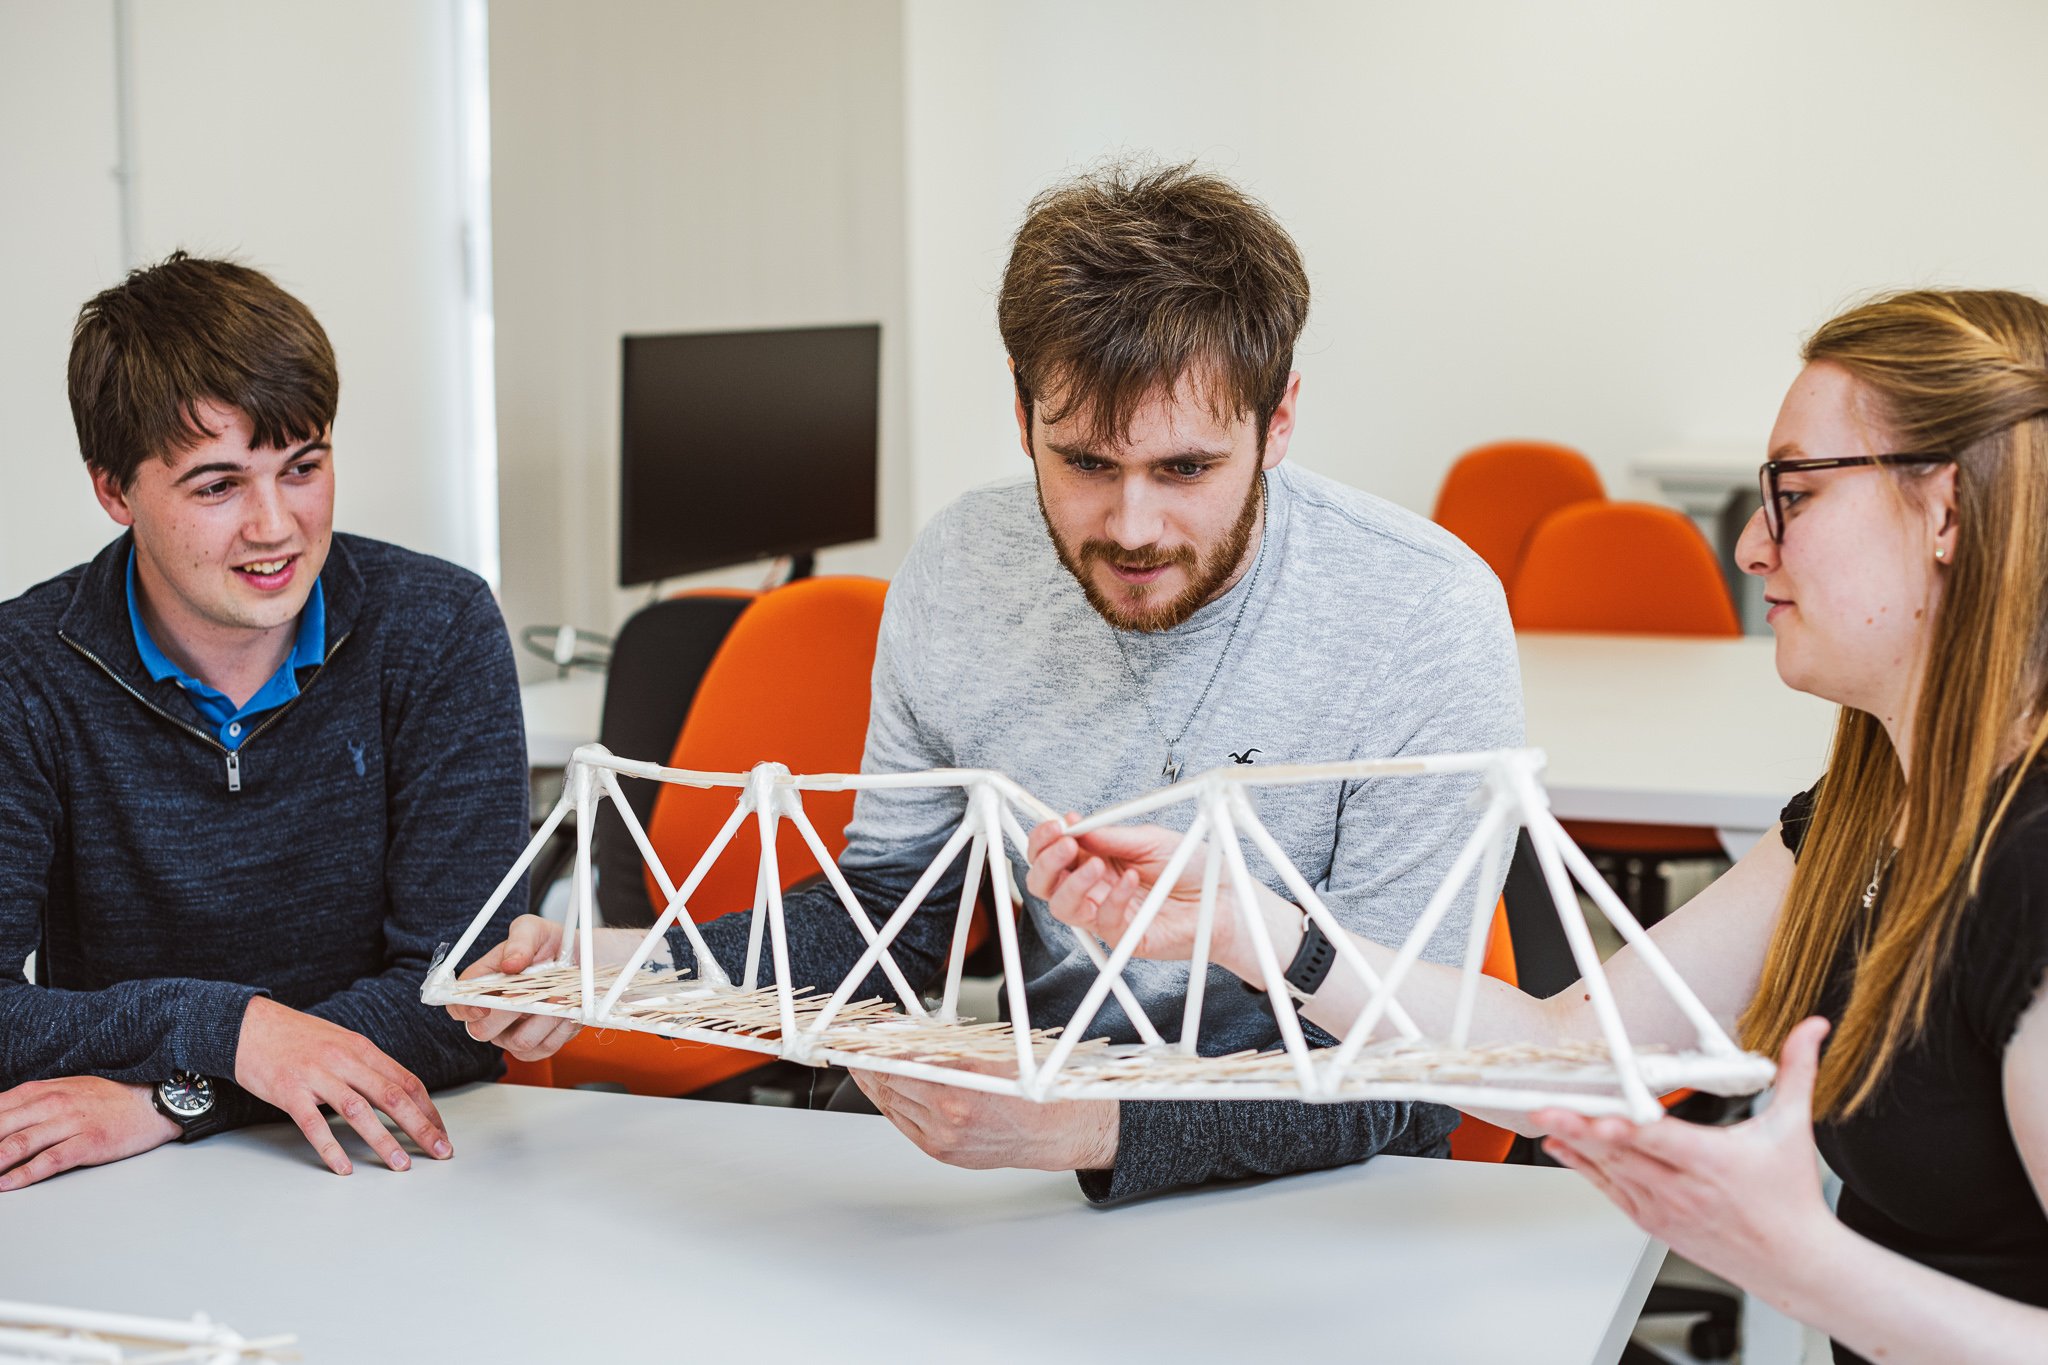 NMITE integrated engineering degree students building model bridge